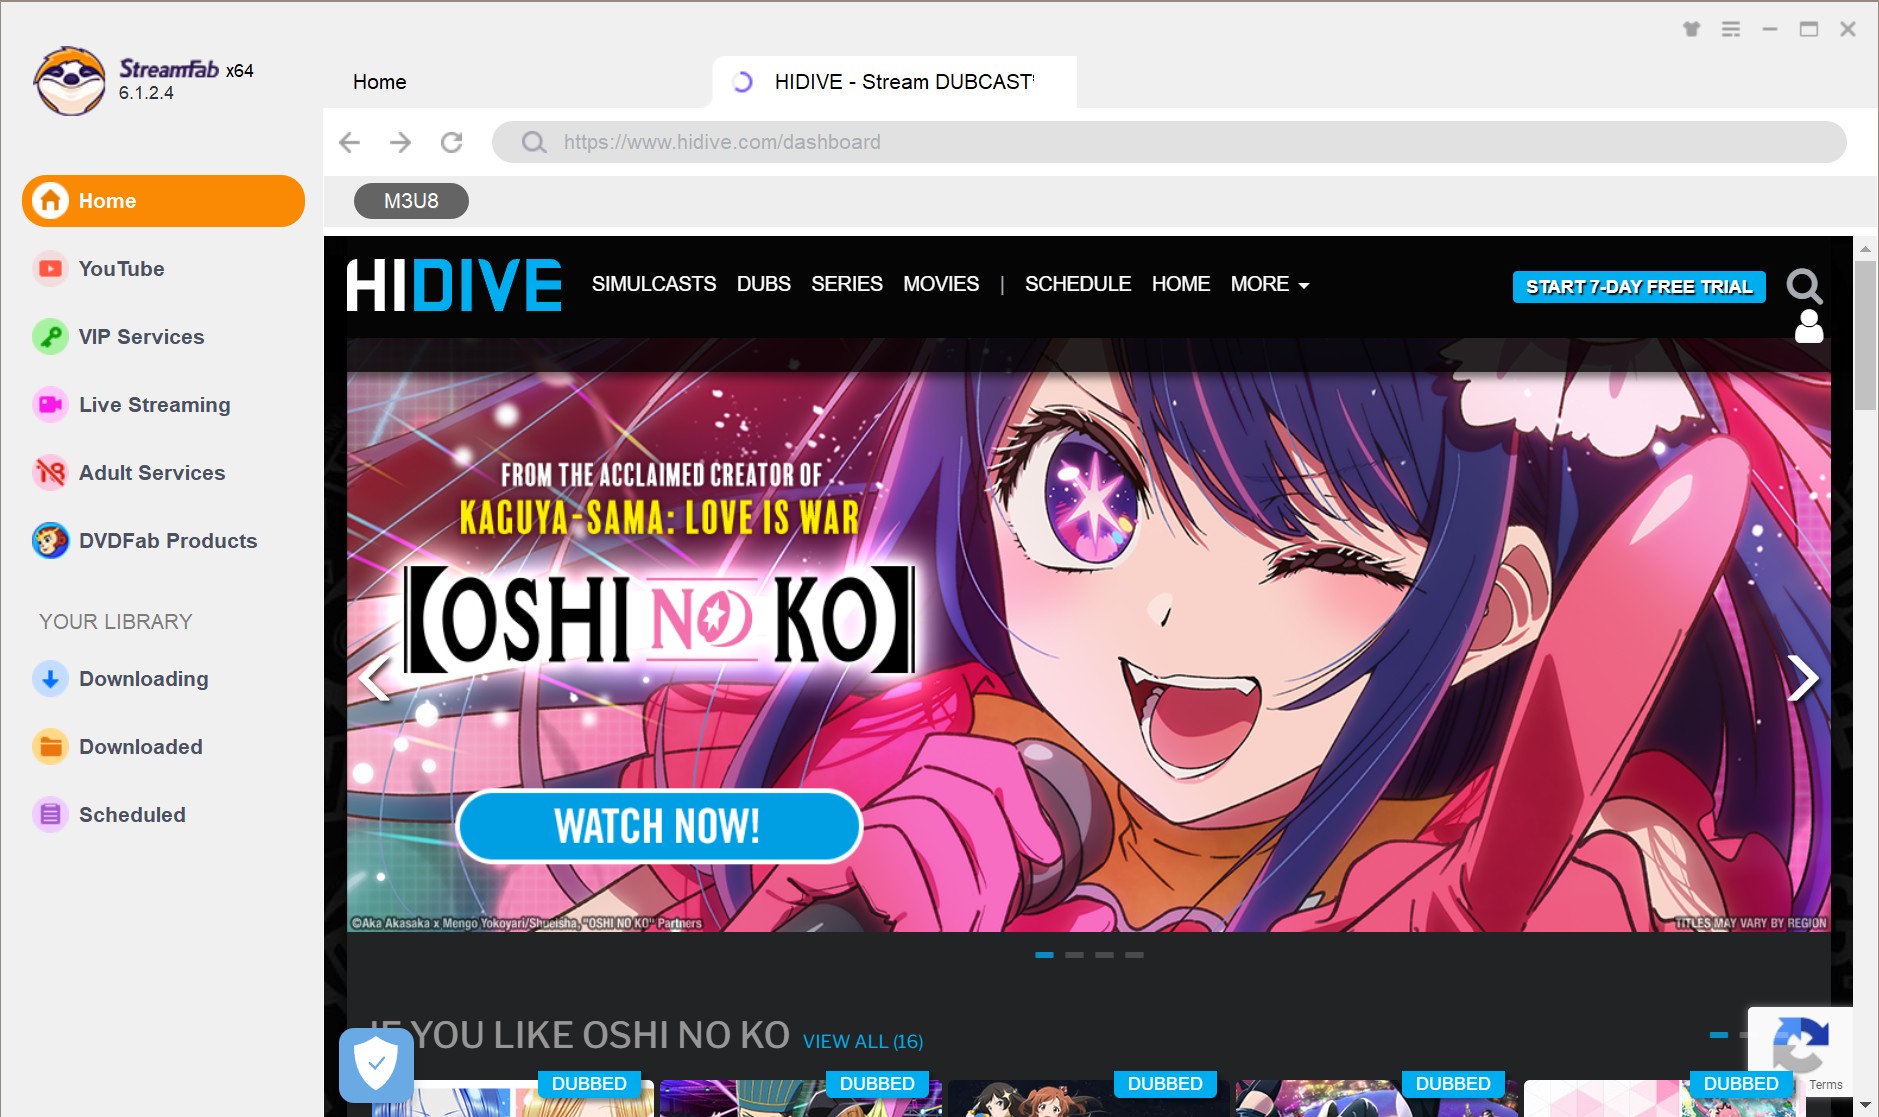 Where to Watch Oshi no Ko: Crunchyroll, Netflix, HIDIVE in Sub and Dub